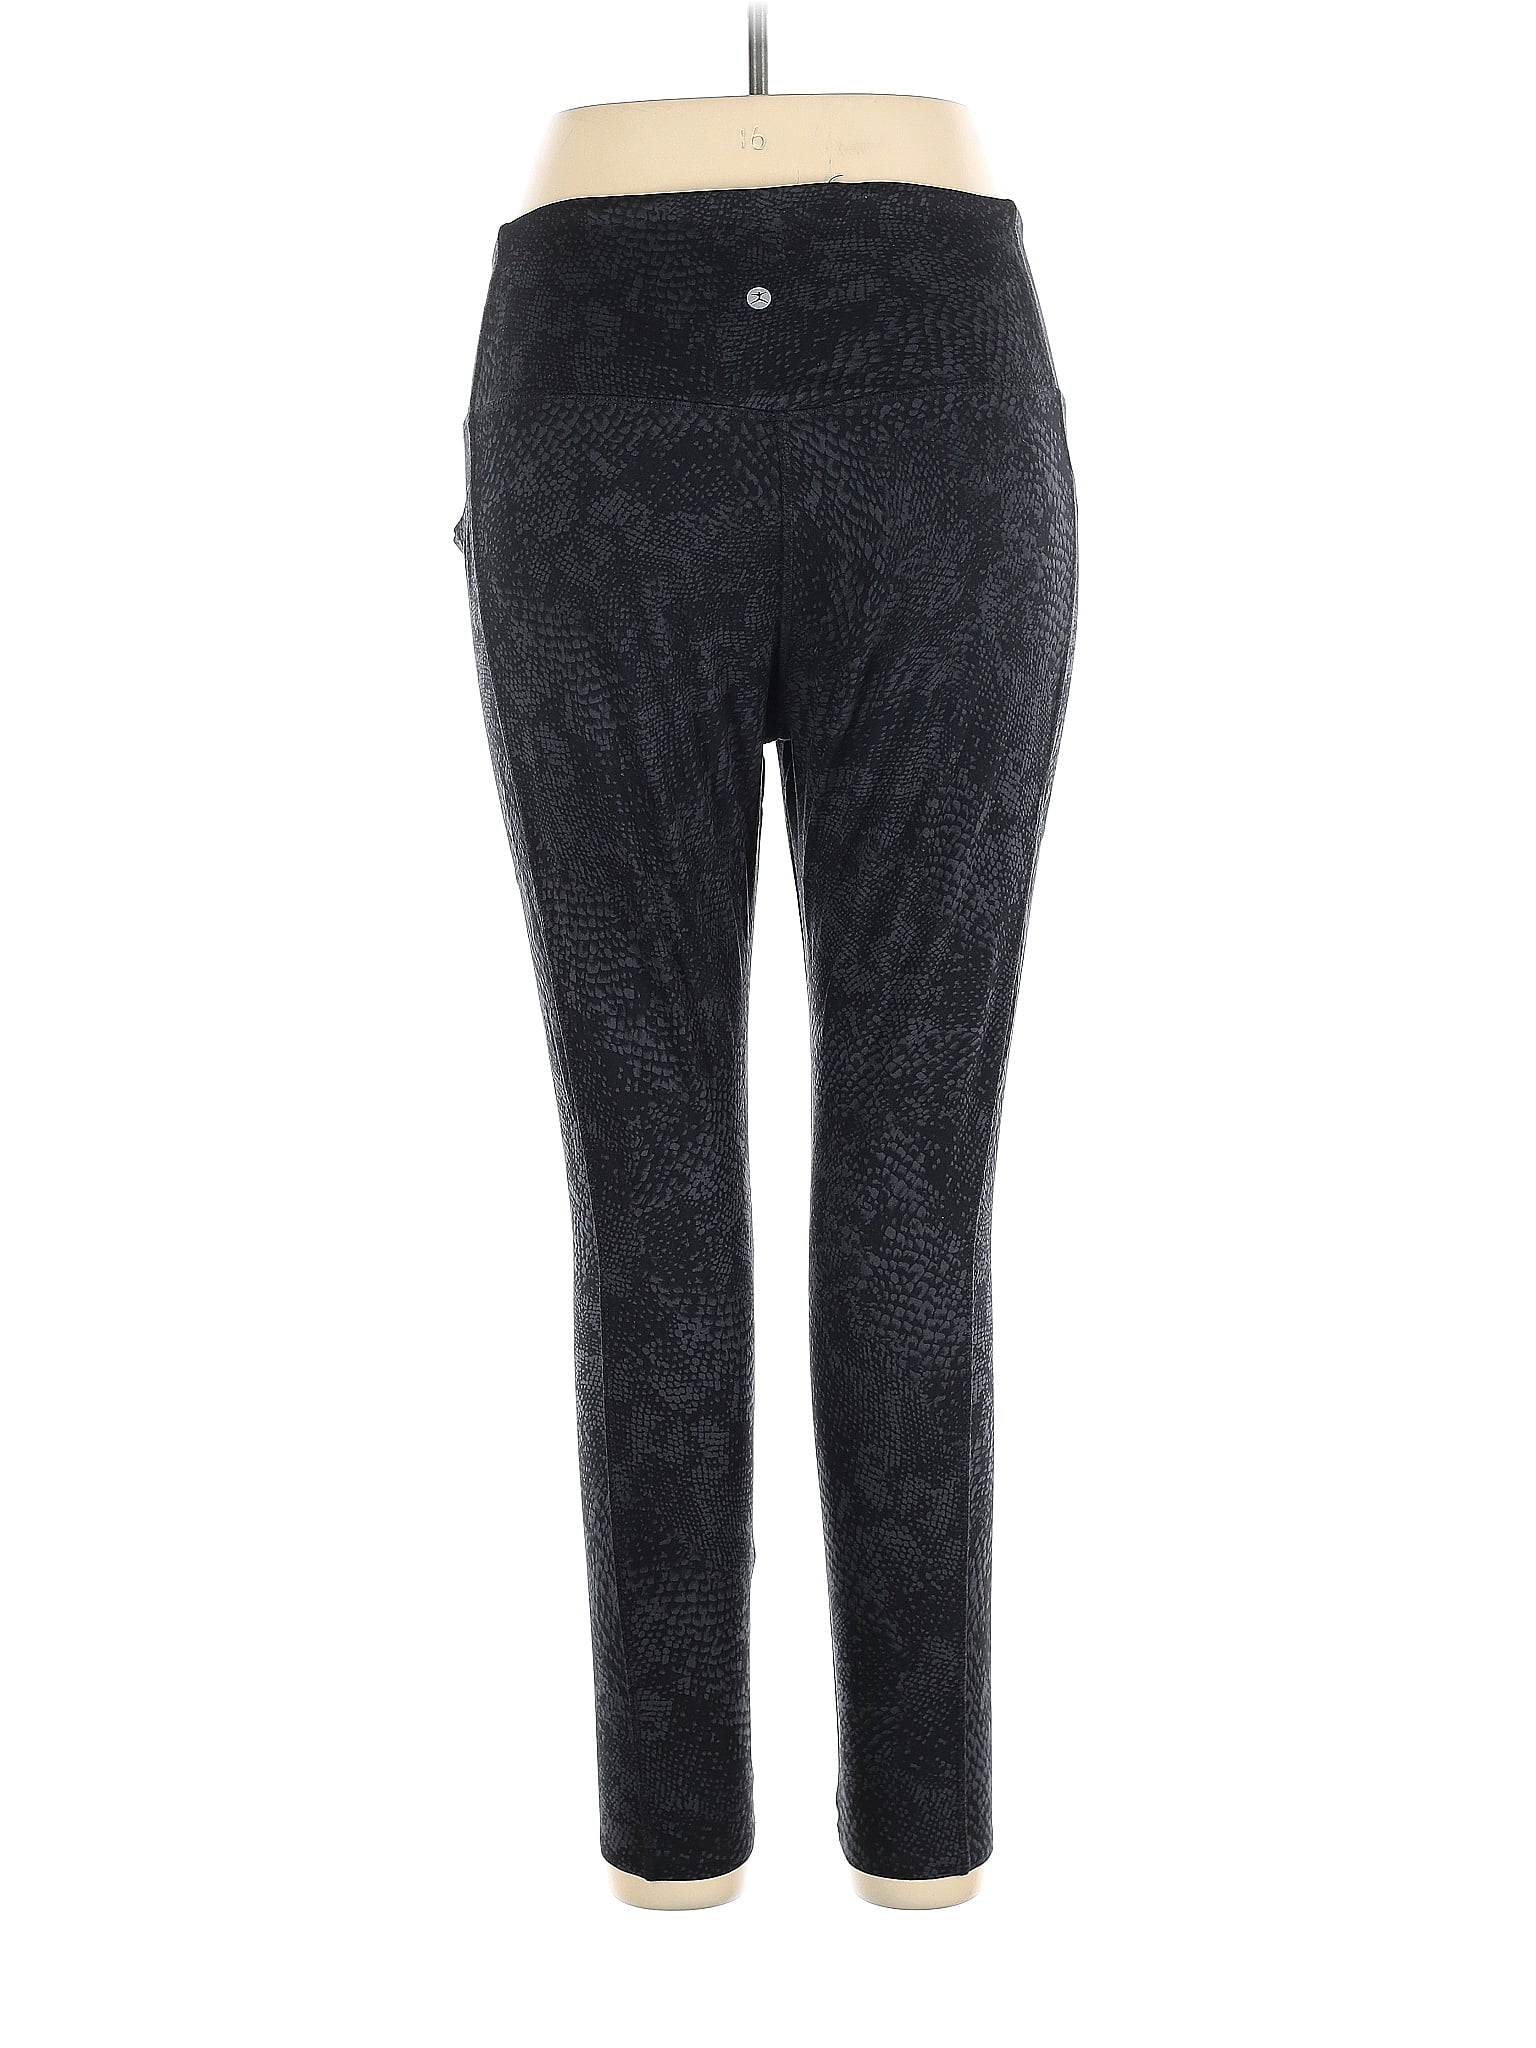 Danskin Black Active Pants Size XXL - 51% off